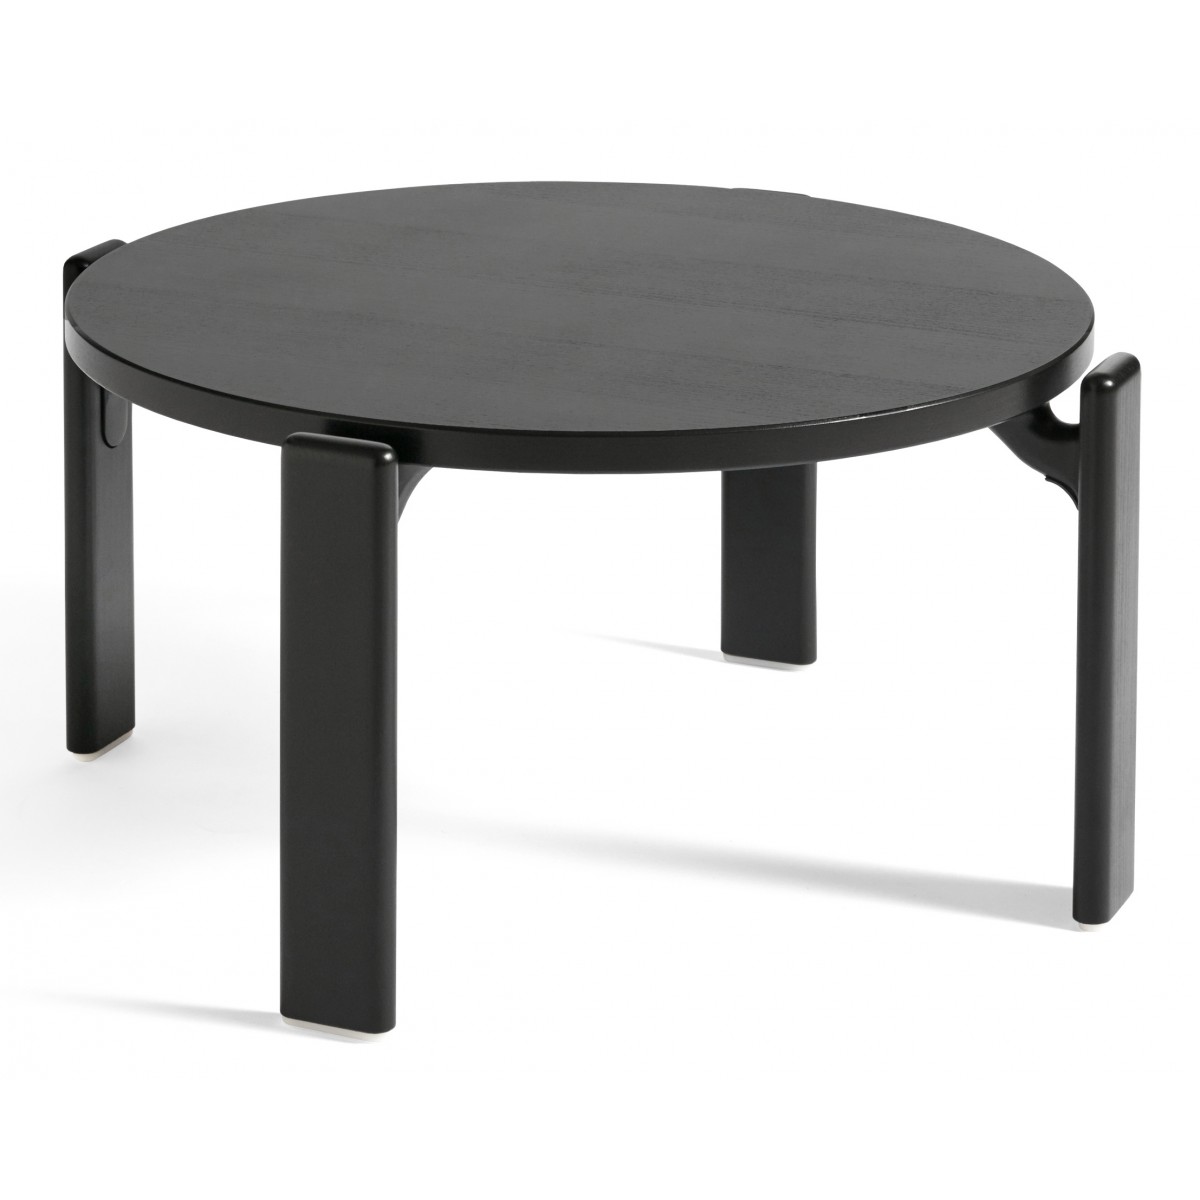 Deep black - REY coffee table